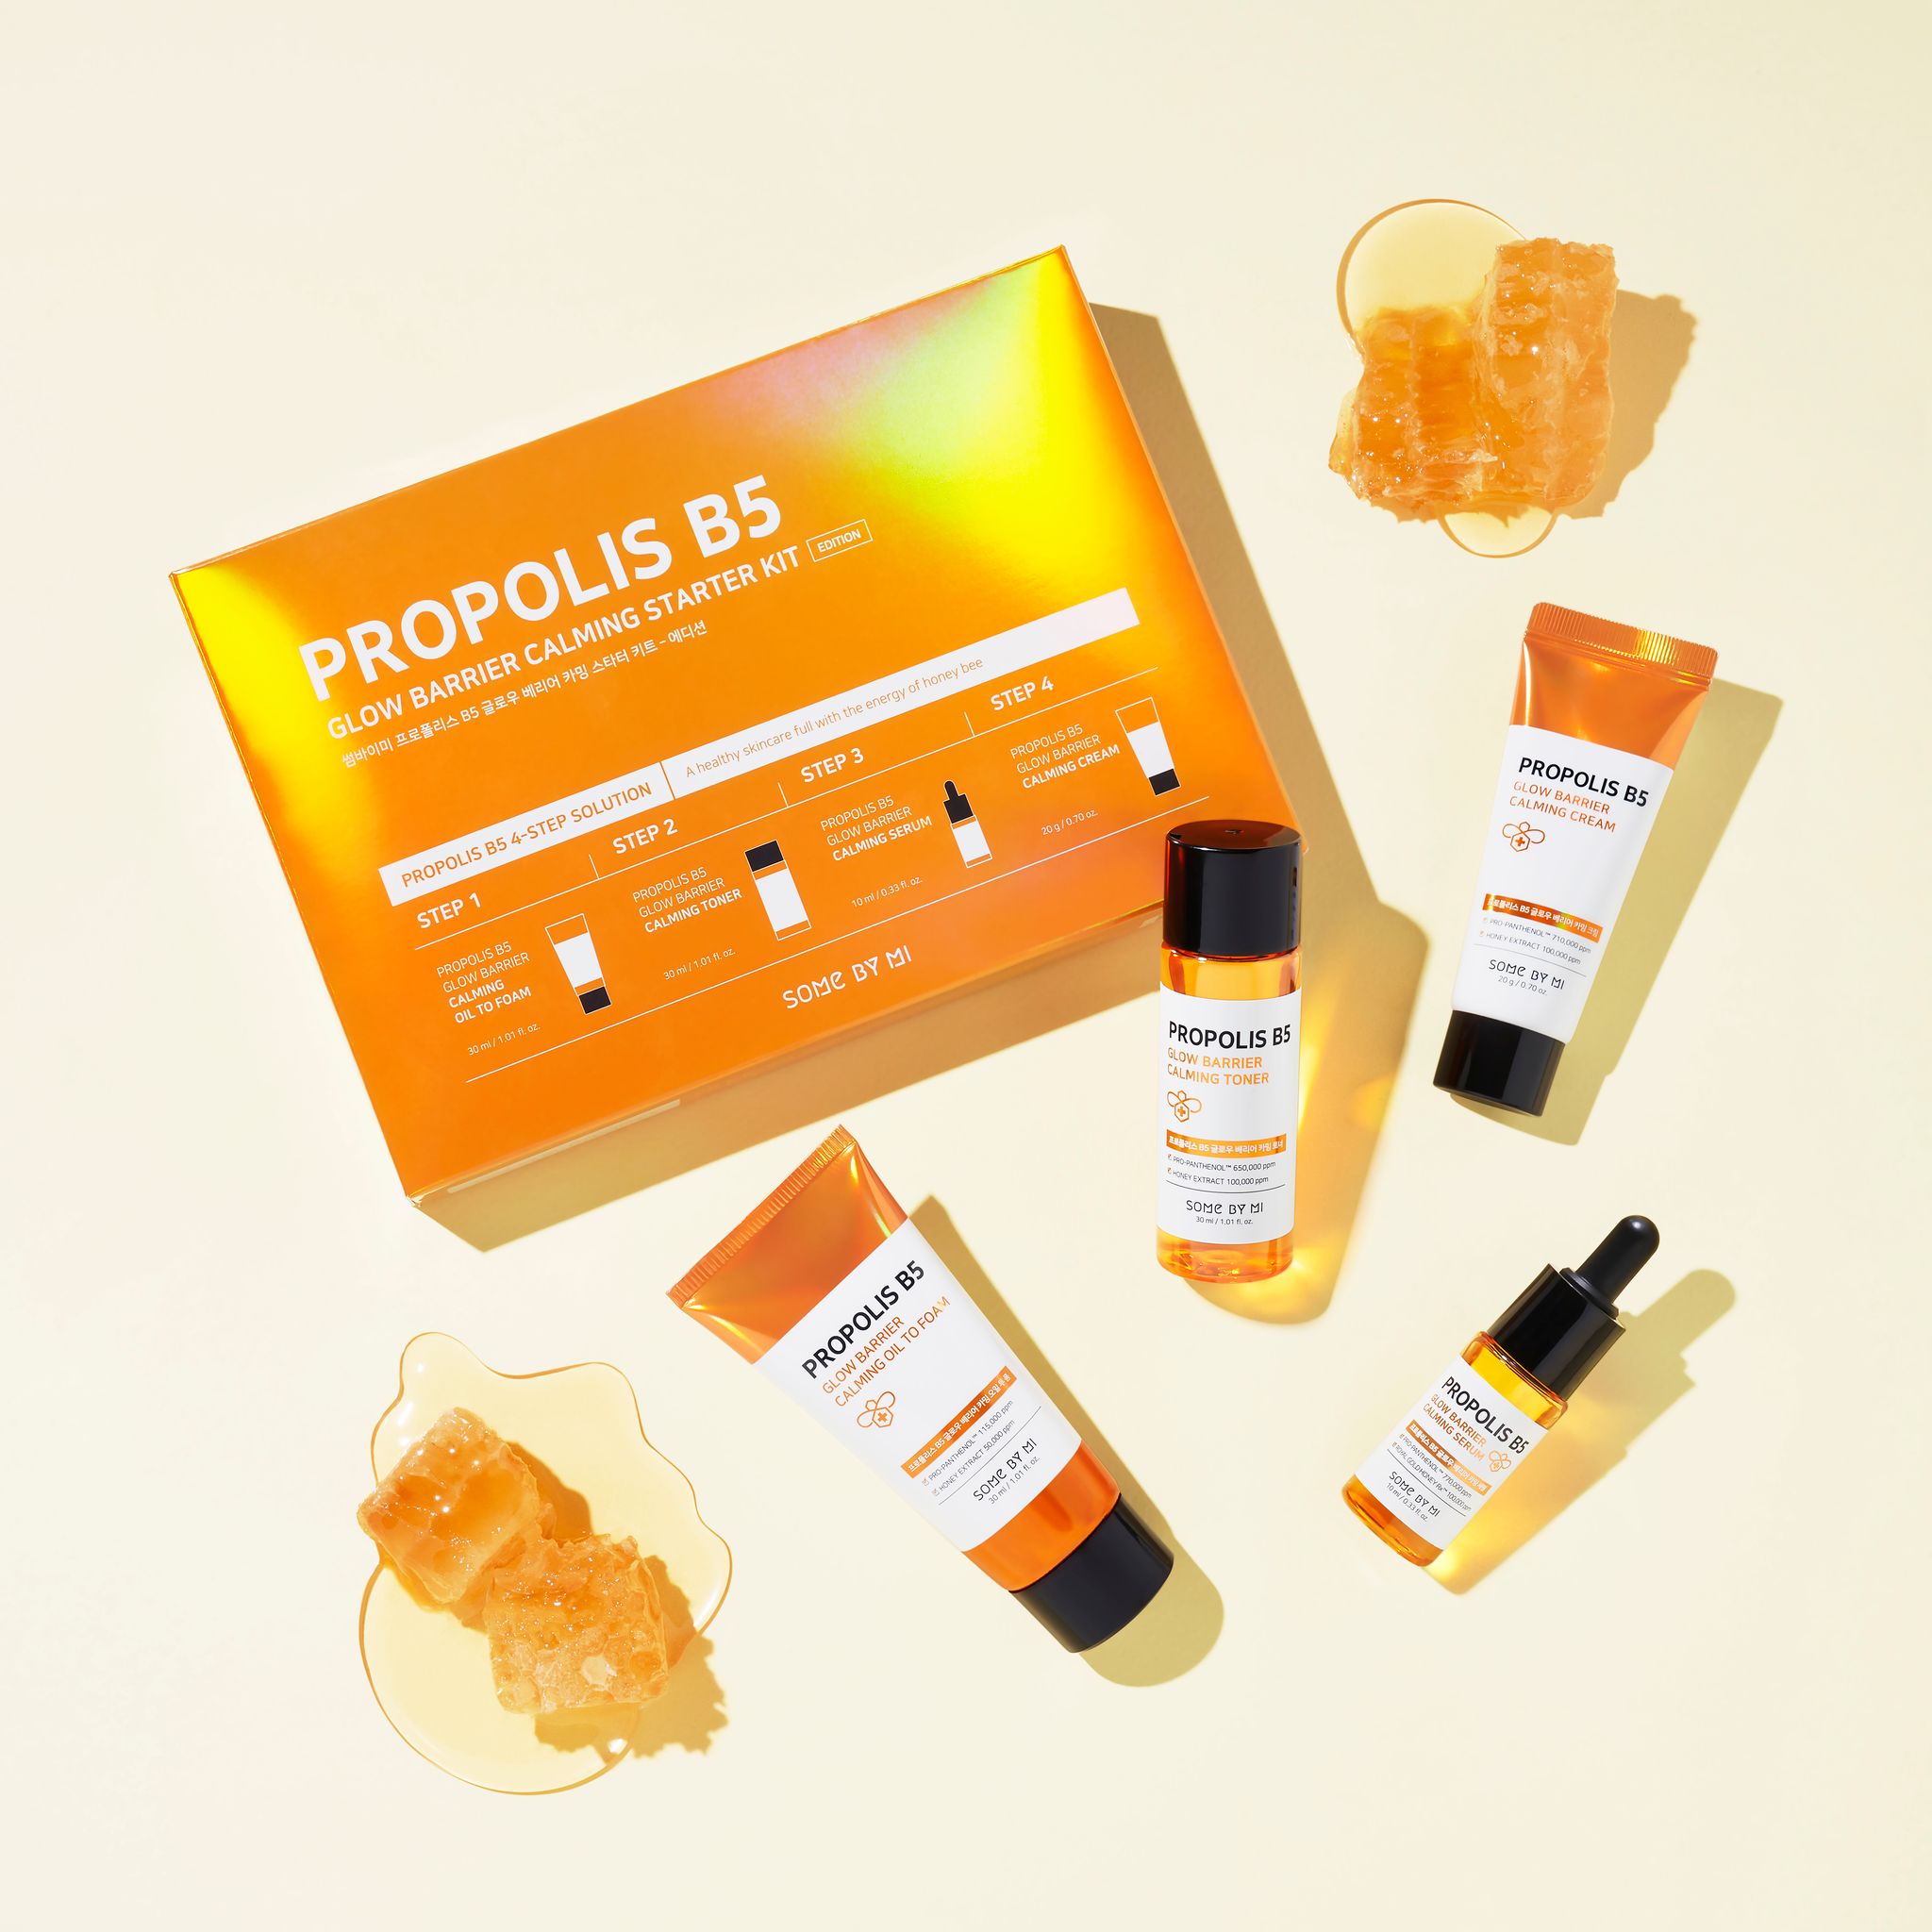 Propolis B5 Glow Barrier Calming Kit